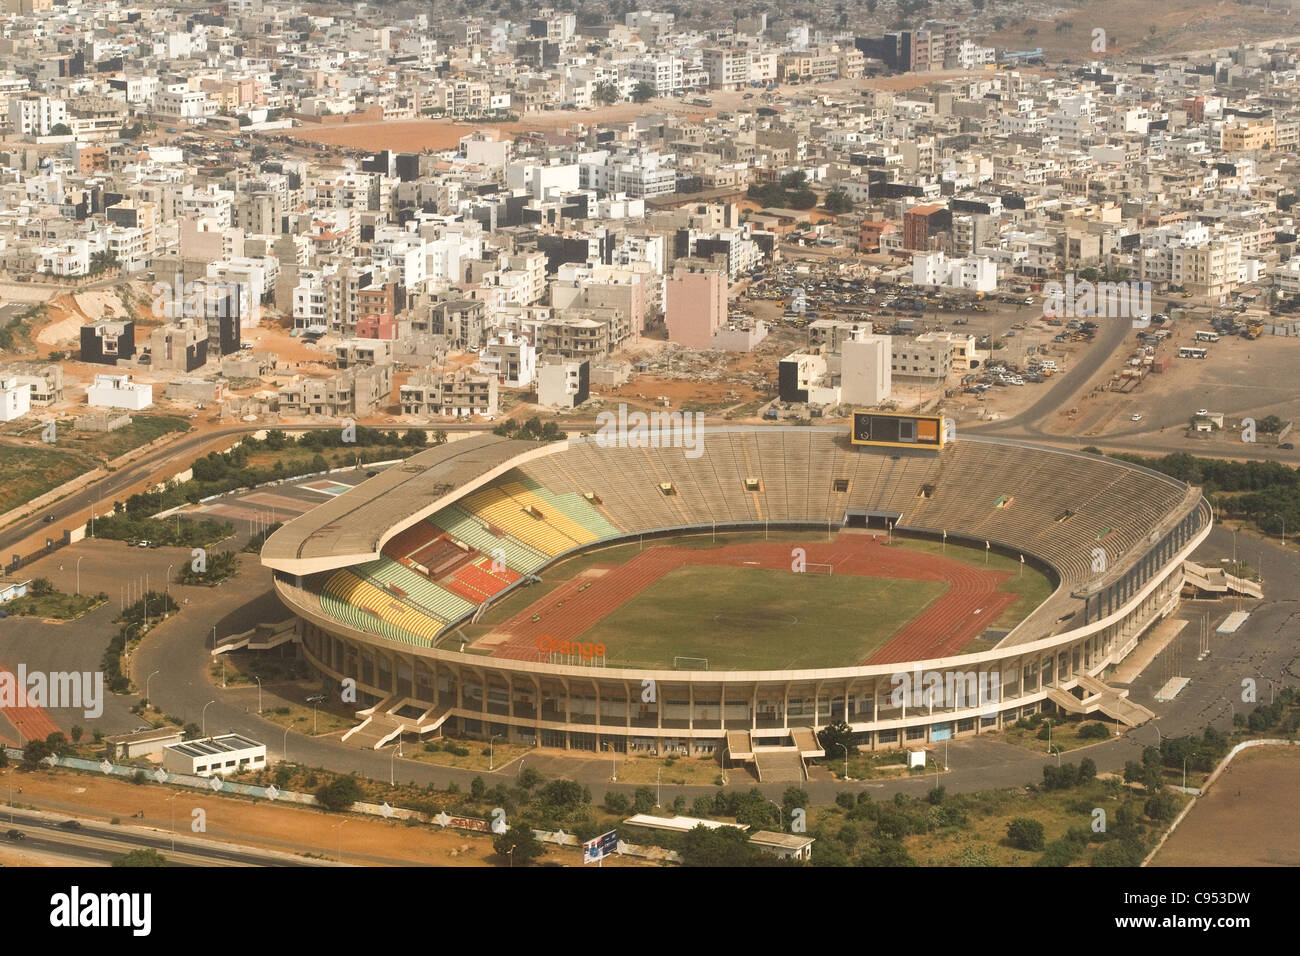 Vista aerea del stade Leopold Sedar Senghor stadium di Dakar in Senegal. Foto Stock